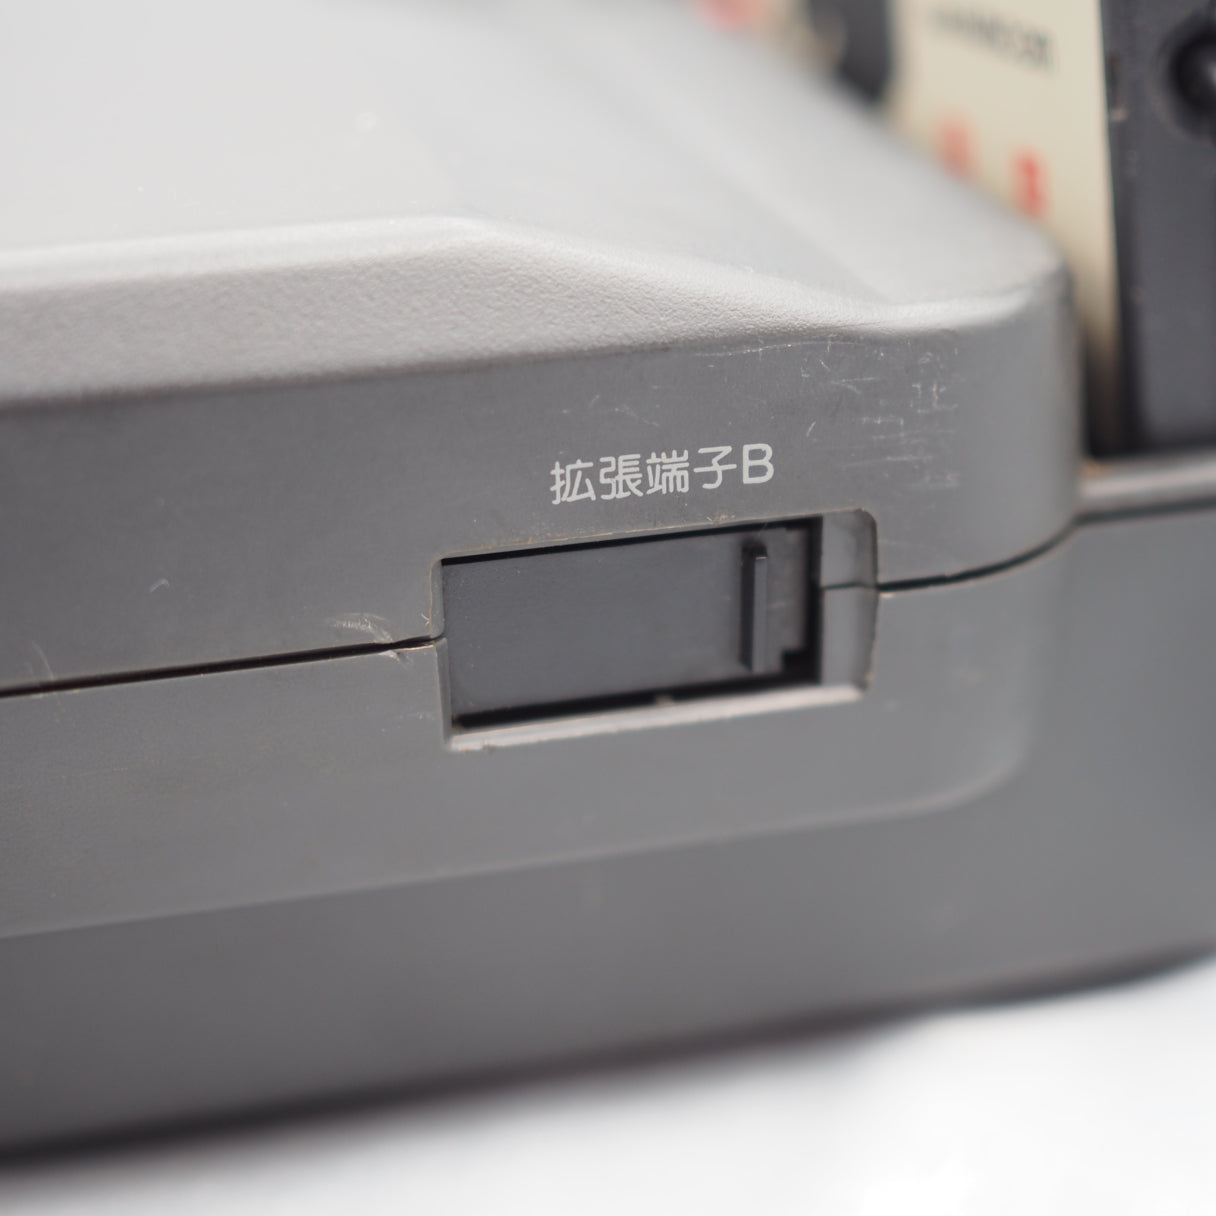 Twin Famicom AN-500B [New Rubber Belt replaced] No.3